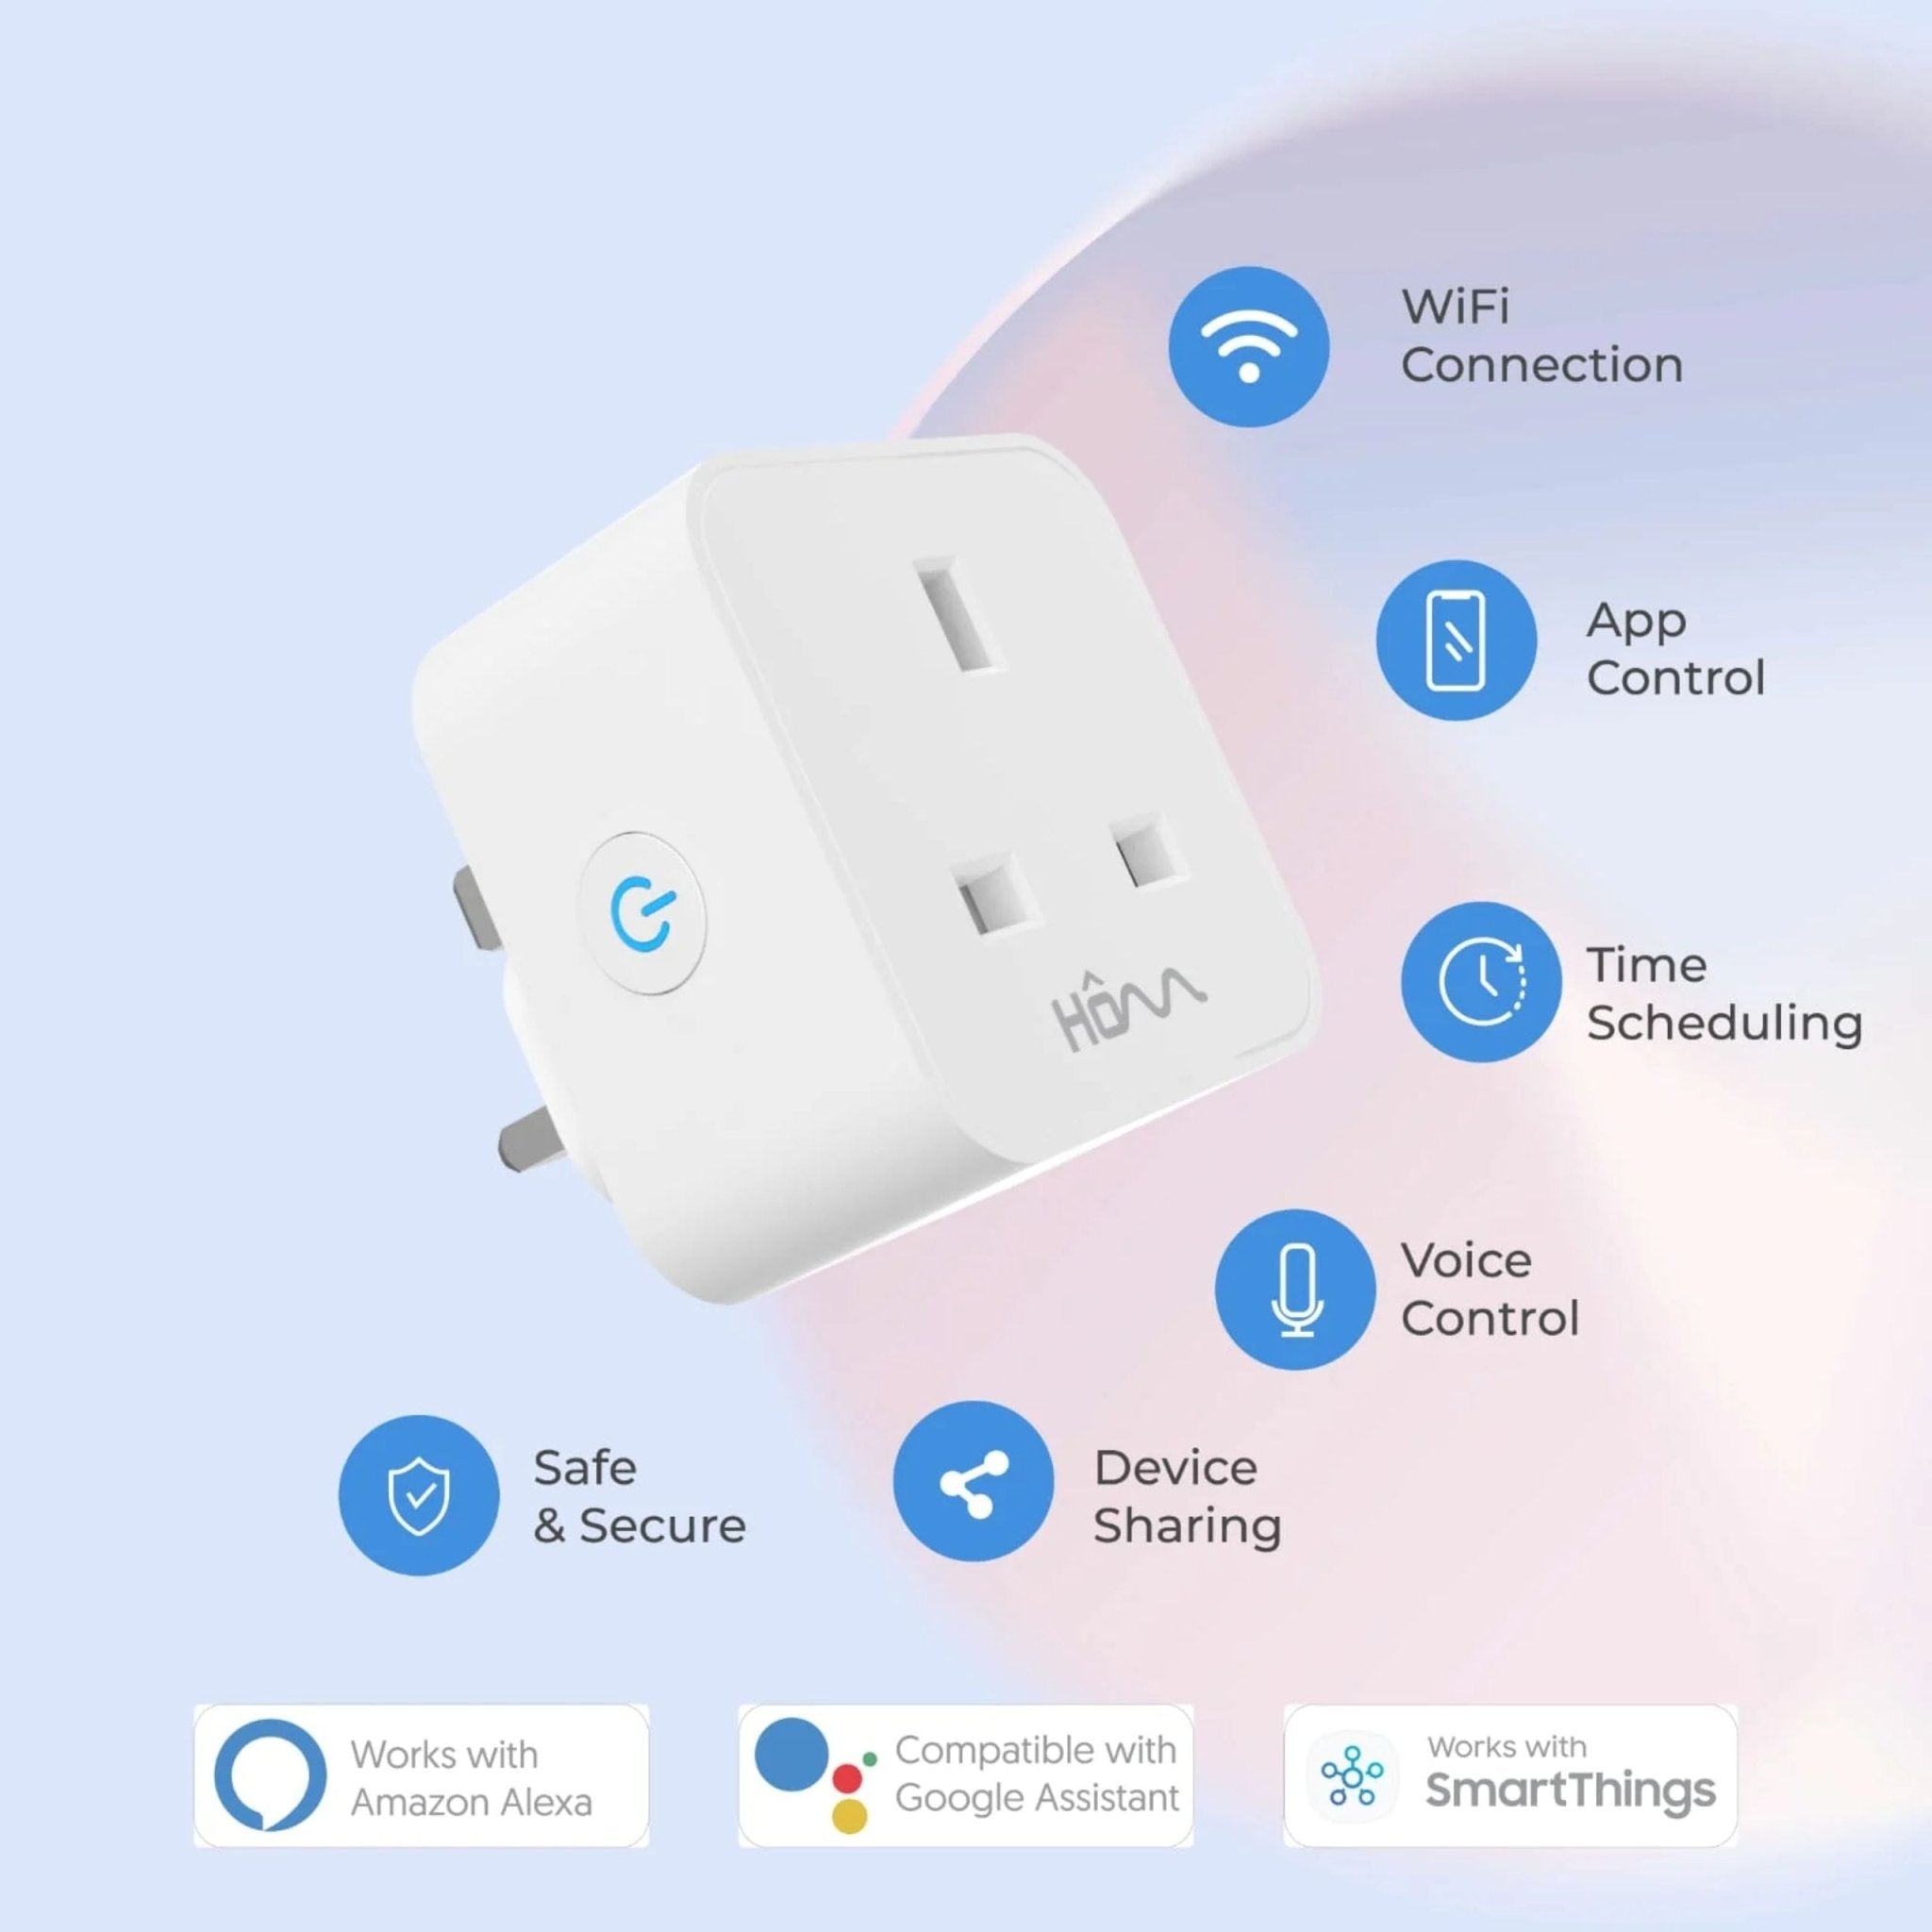 Blupebble Homm Power One Smart Plug Wifi and Bluetooth - White